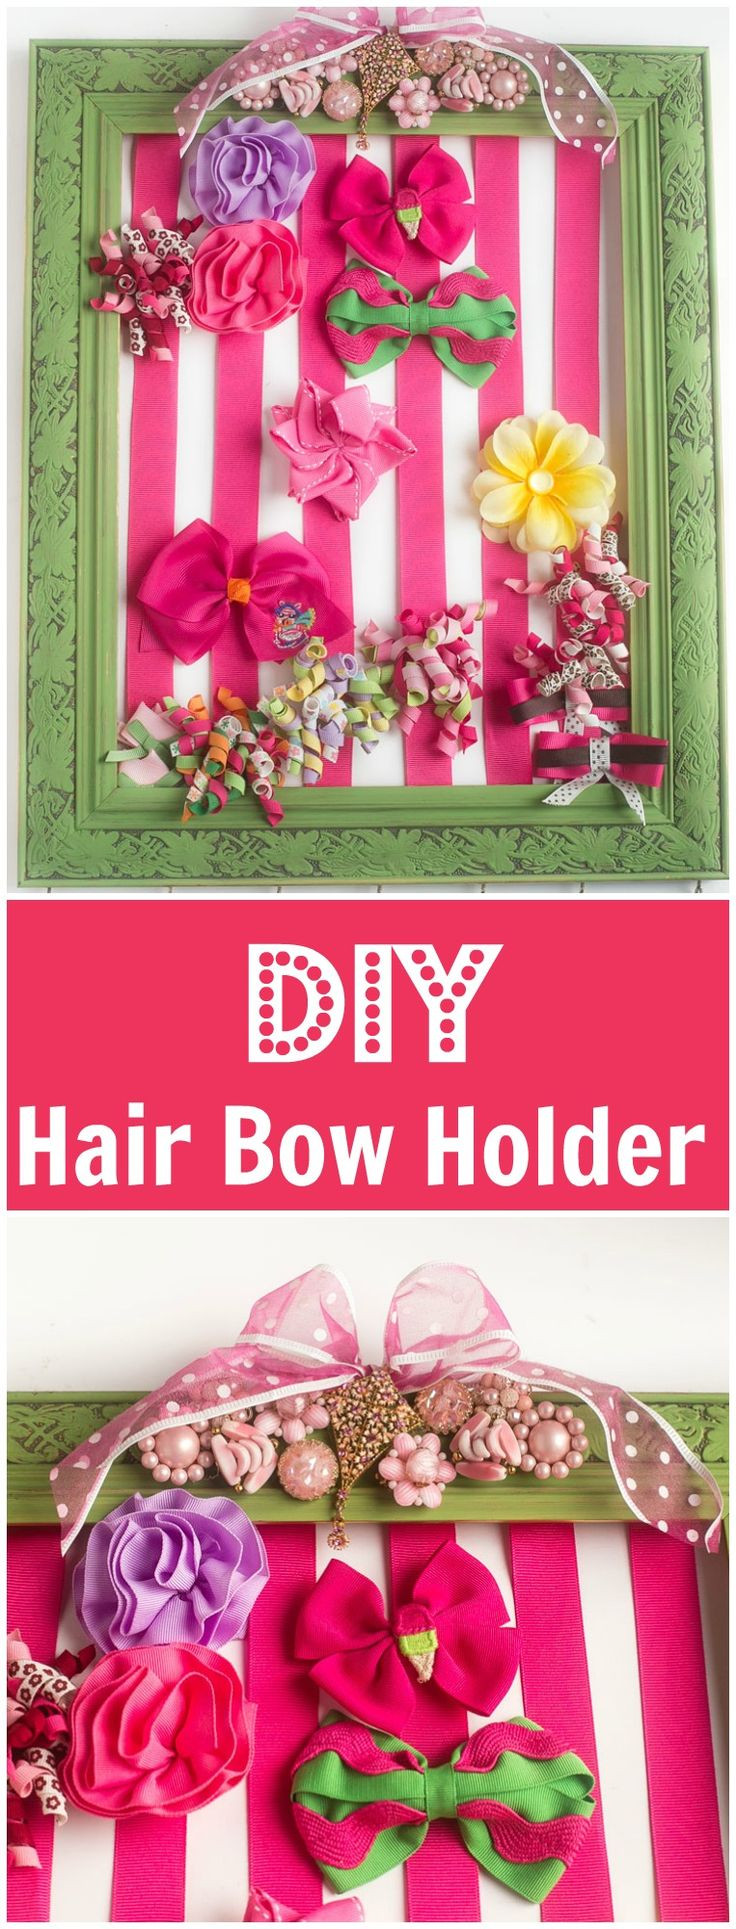 DIY Hairbow Holder
 Diy hair bows Hair bow holders and Bow holders on Pinterest